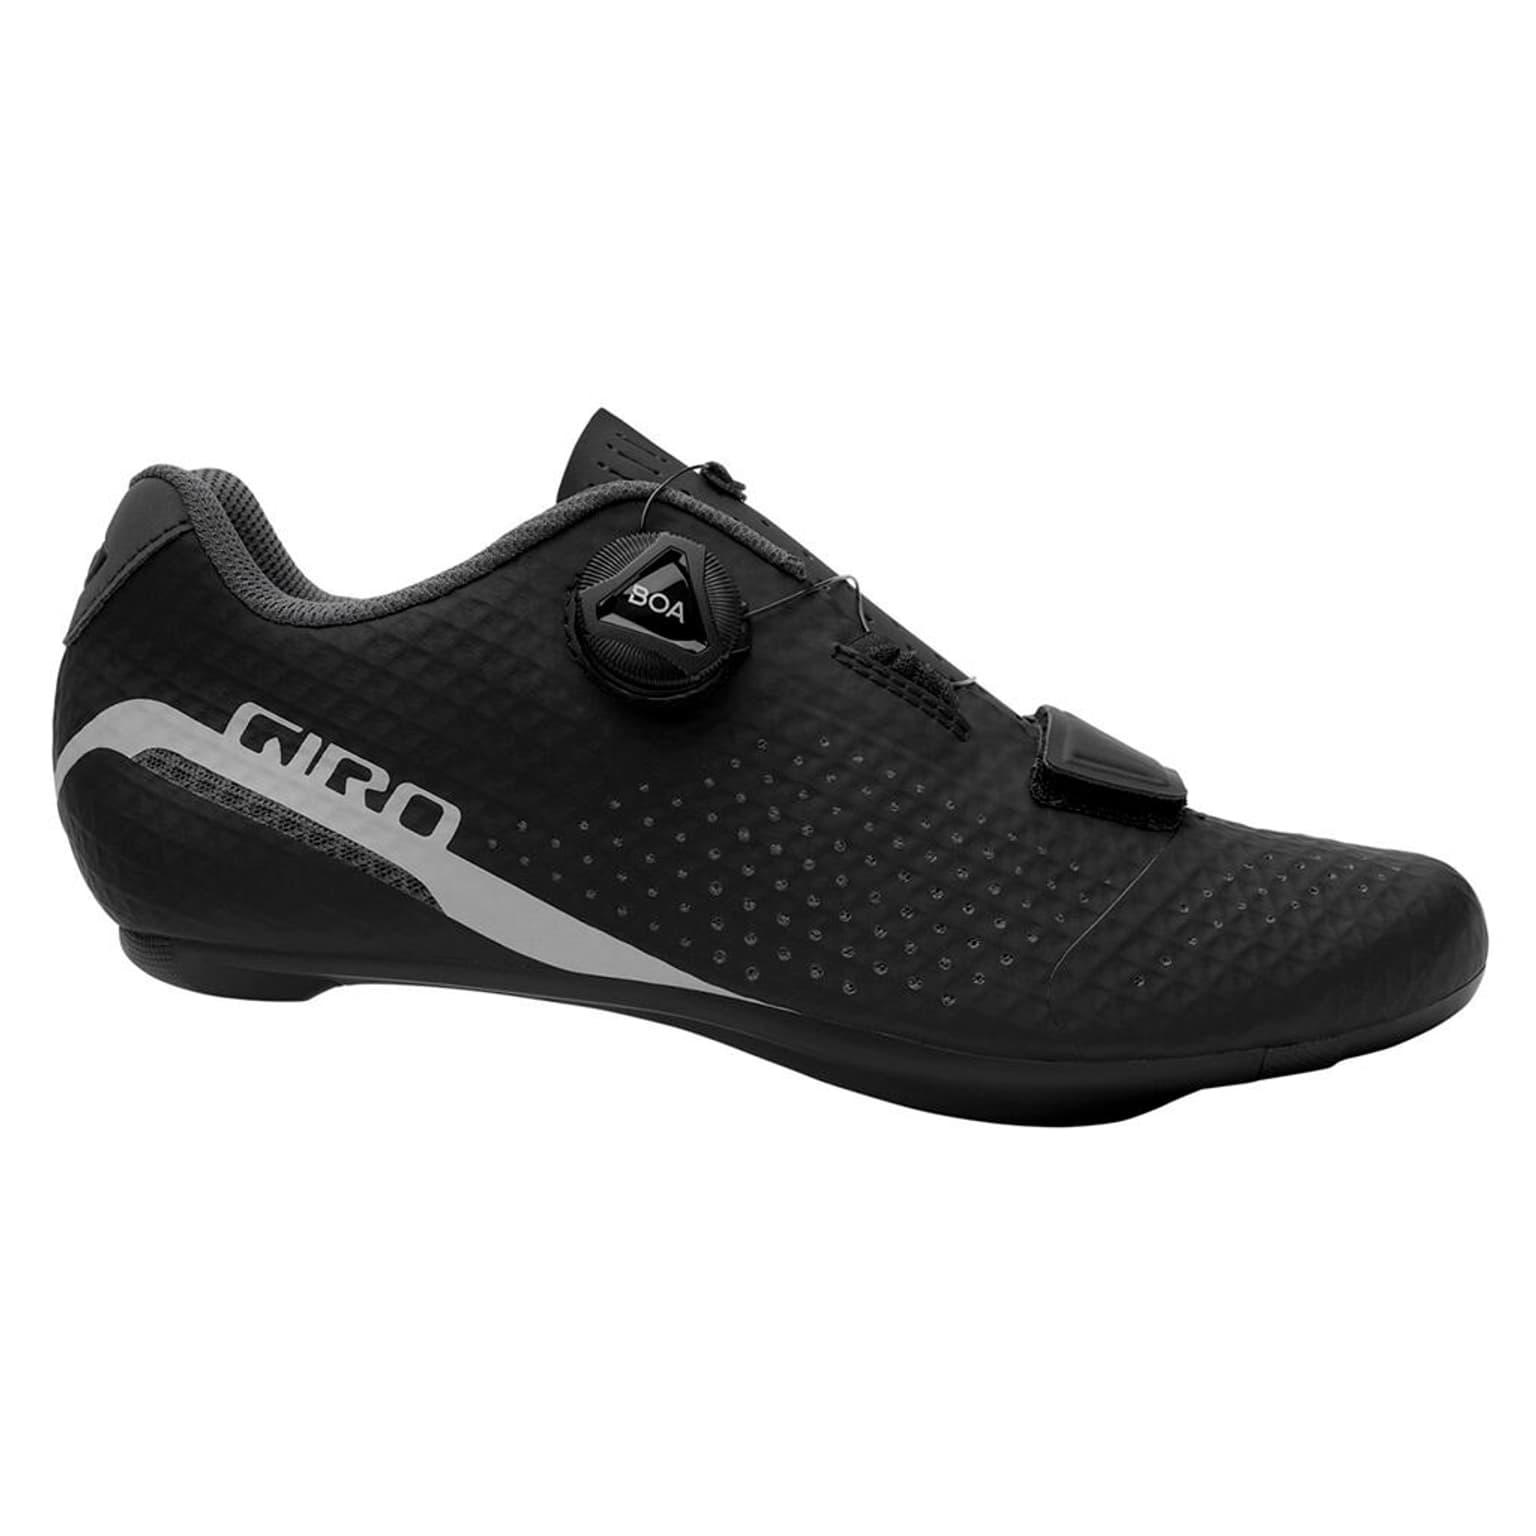 Giro Giro Cadet W Shoe Veloschuhe noir 1